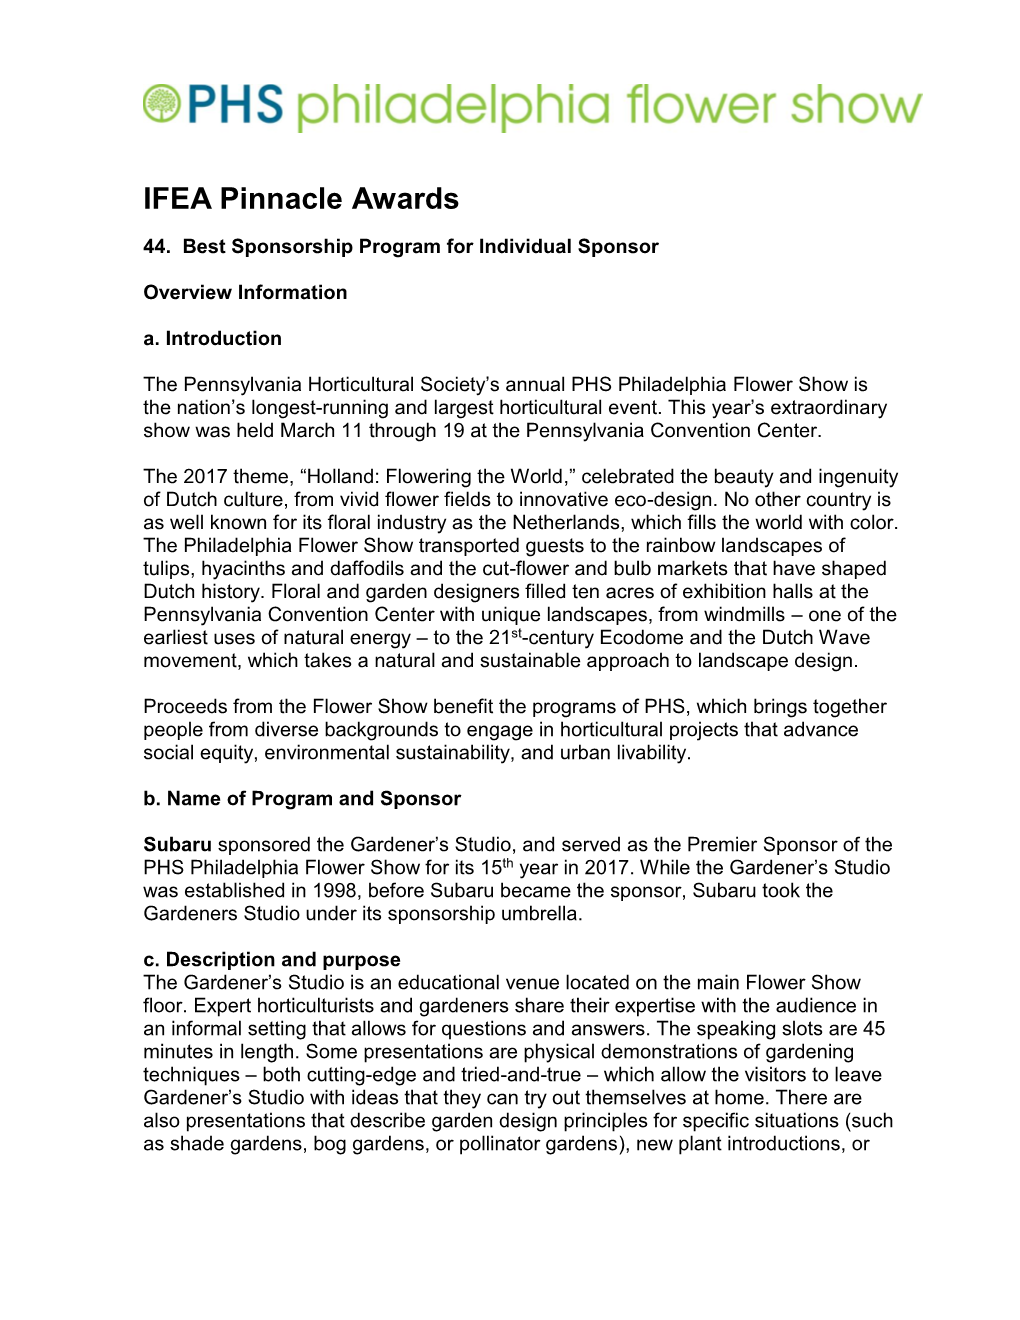 IFEA Pinnacle Awards